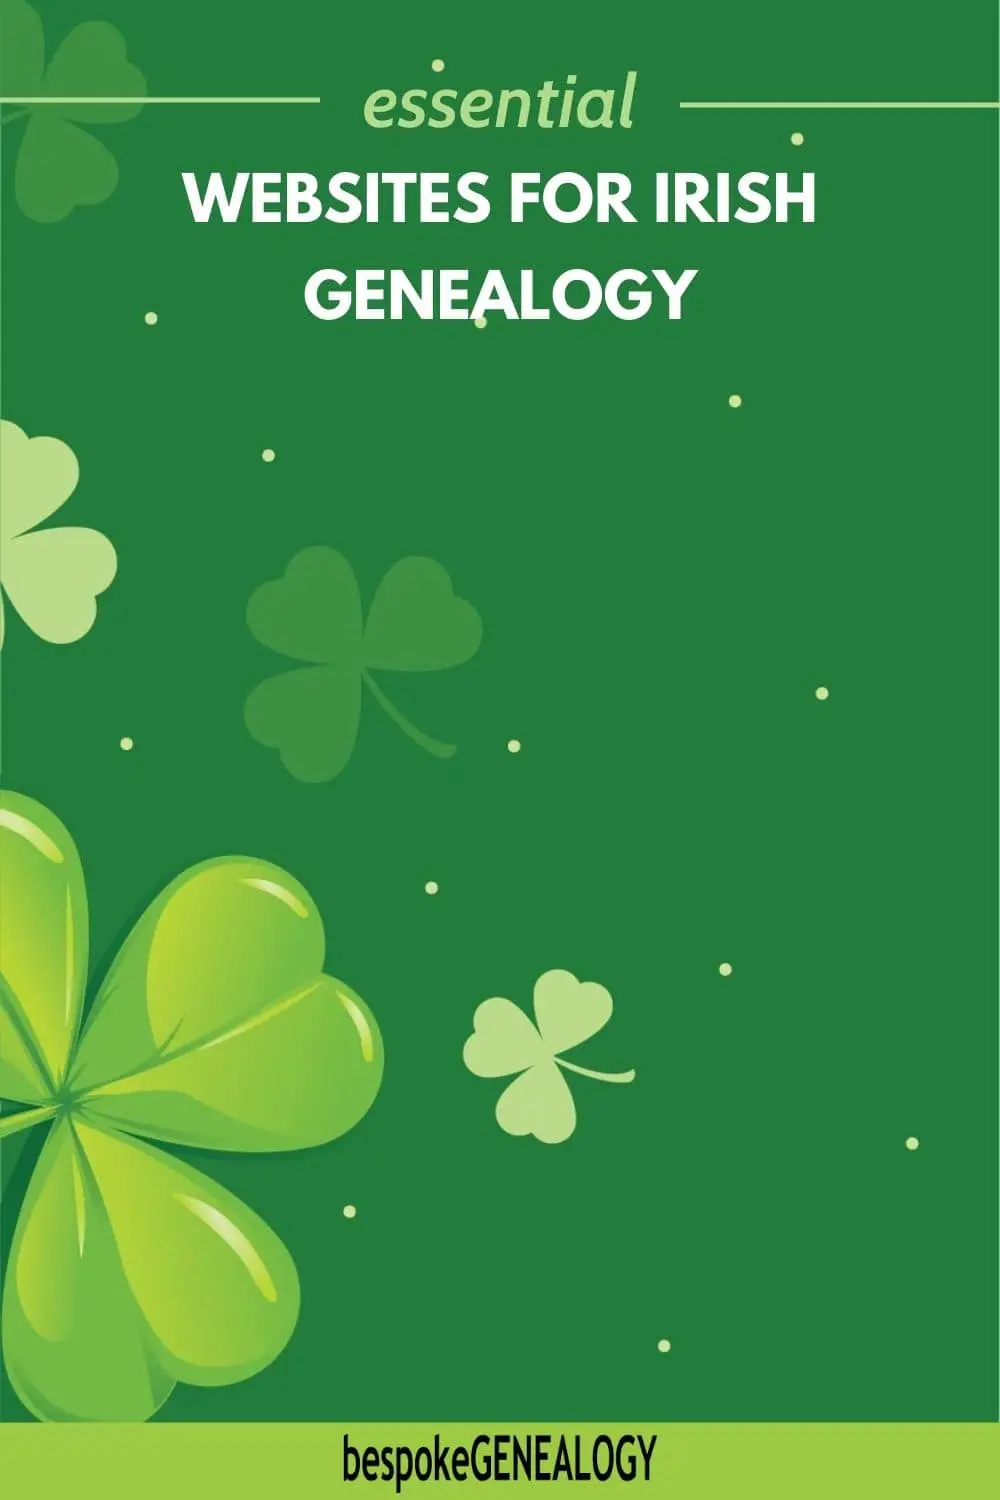 Essential websites for Irish genealogy. Graphic of falling Irish cloverleafs against a green background.